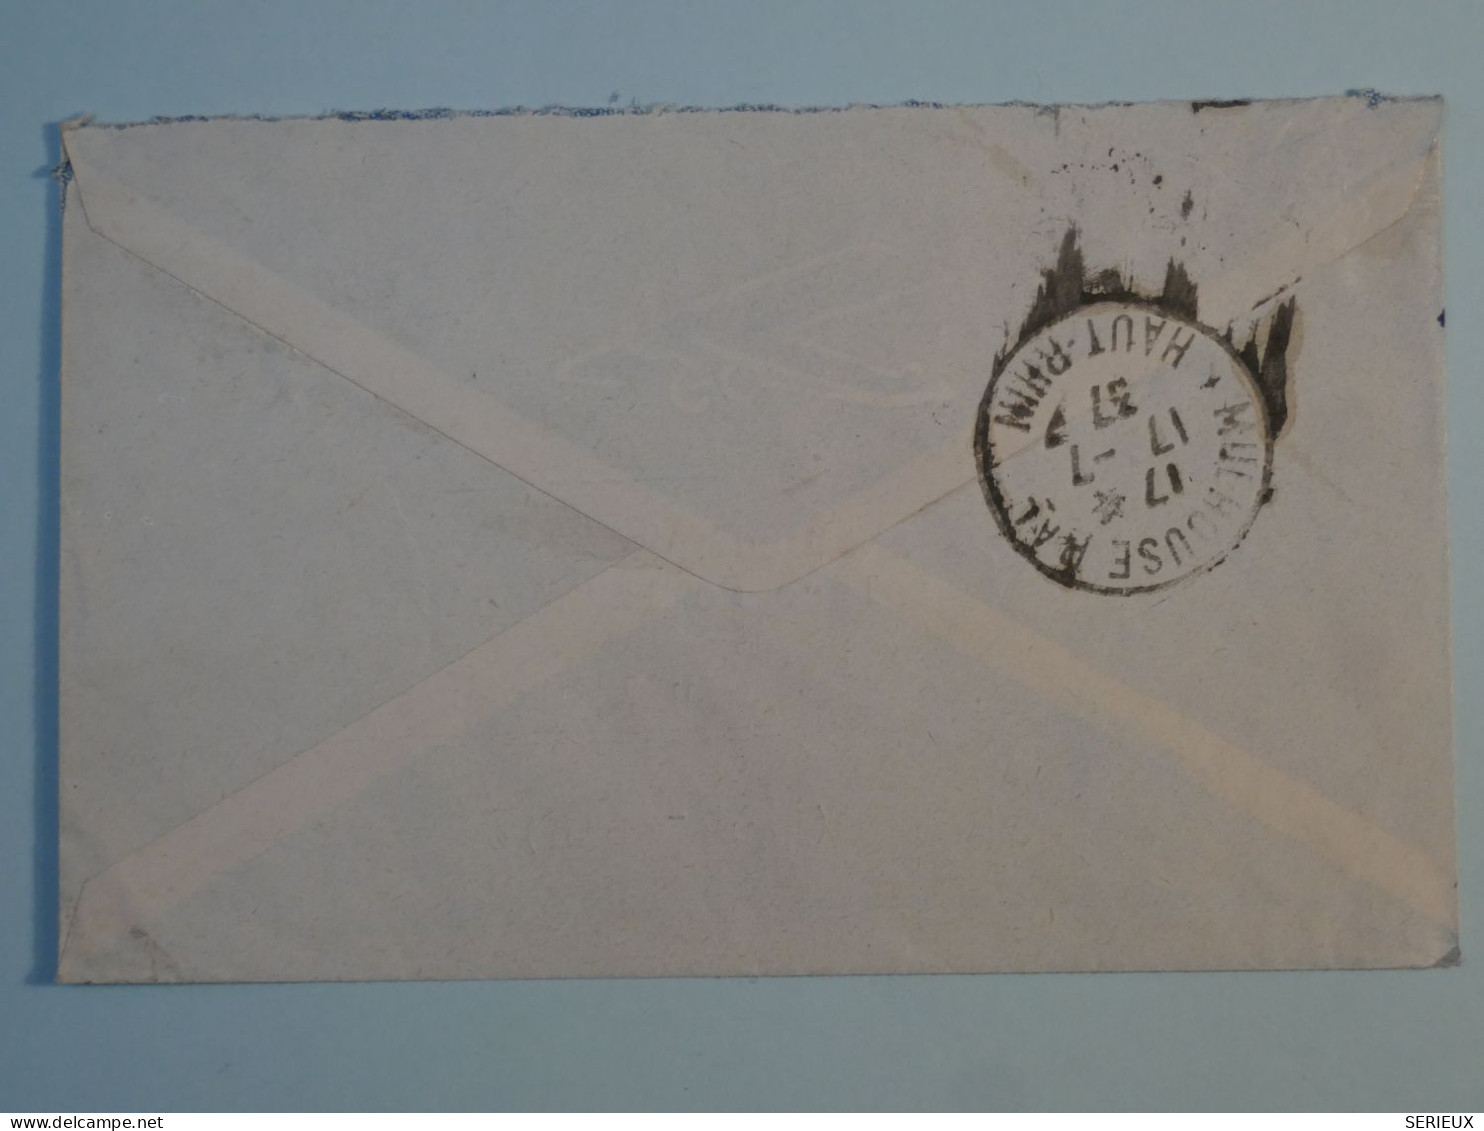 BS6  INDOCHINE BELLE LETTRE 1937 PETIT BUREAU RANGIRE ?  A MULHOUSE   FRANCE ++ AFF INTERESSANT+++ - Covers & Documents